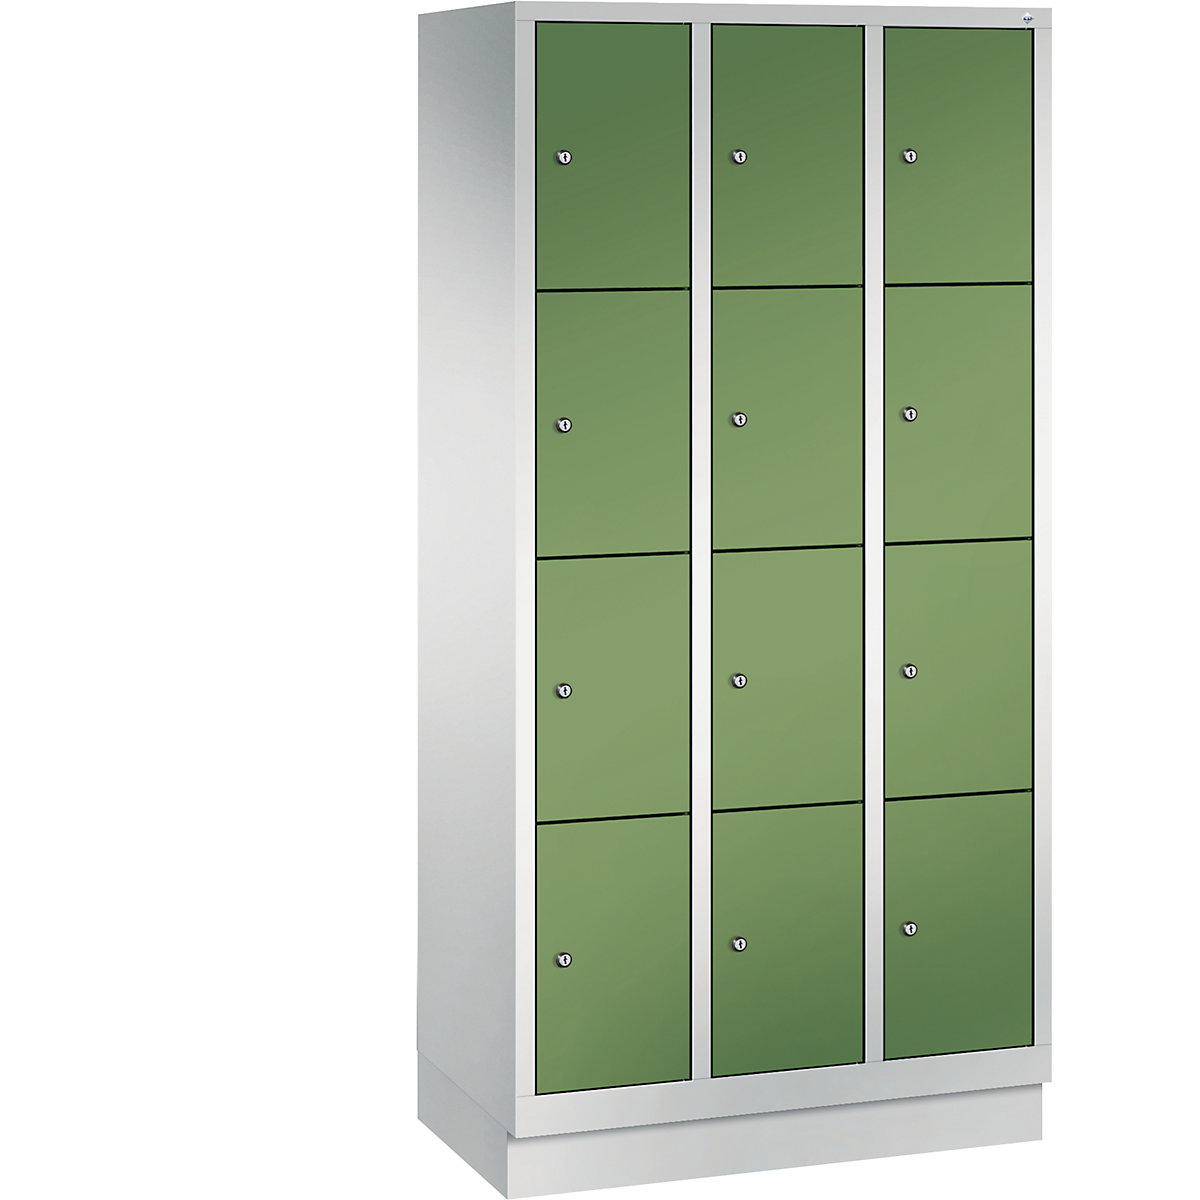 CLASSIC locker unit with plinth – C+P, 3 compartments, 4 shelf compartments each, compartment width 300 mm, light grey / reseda green-11